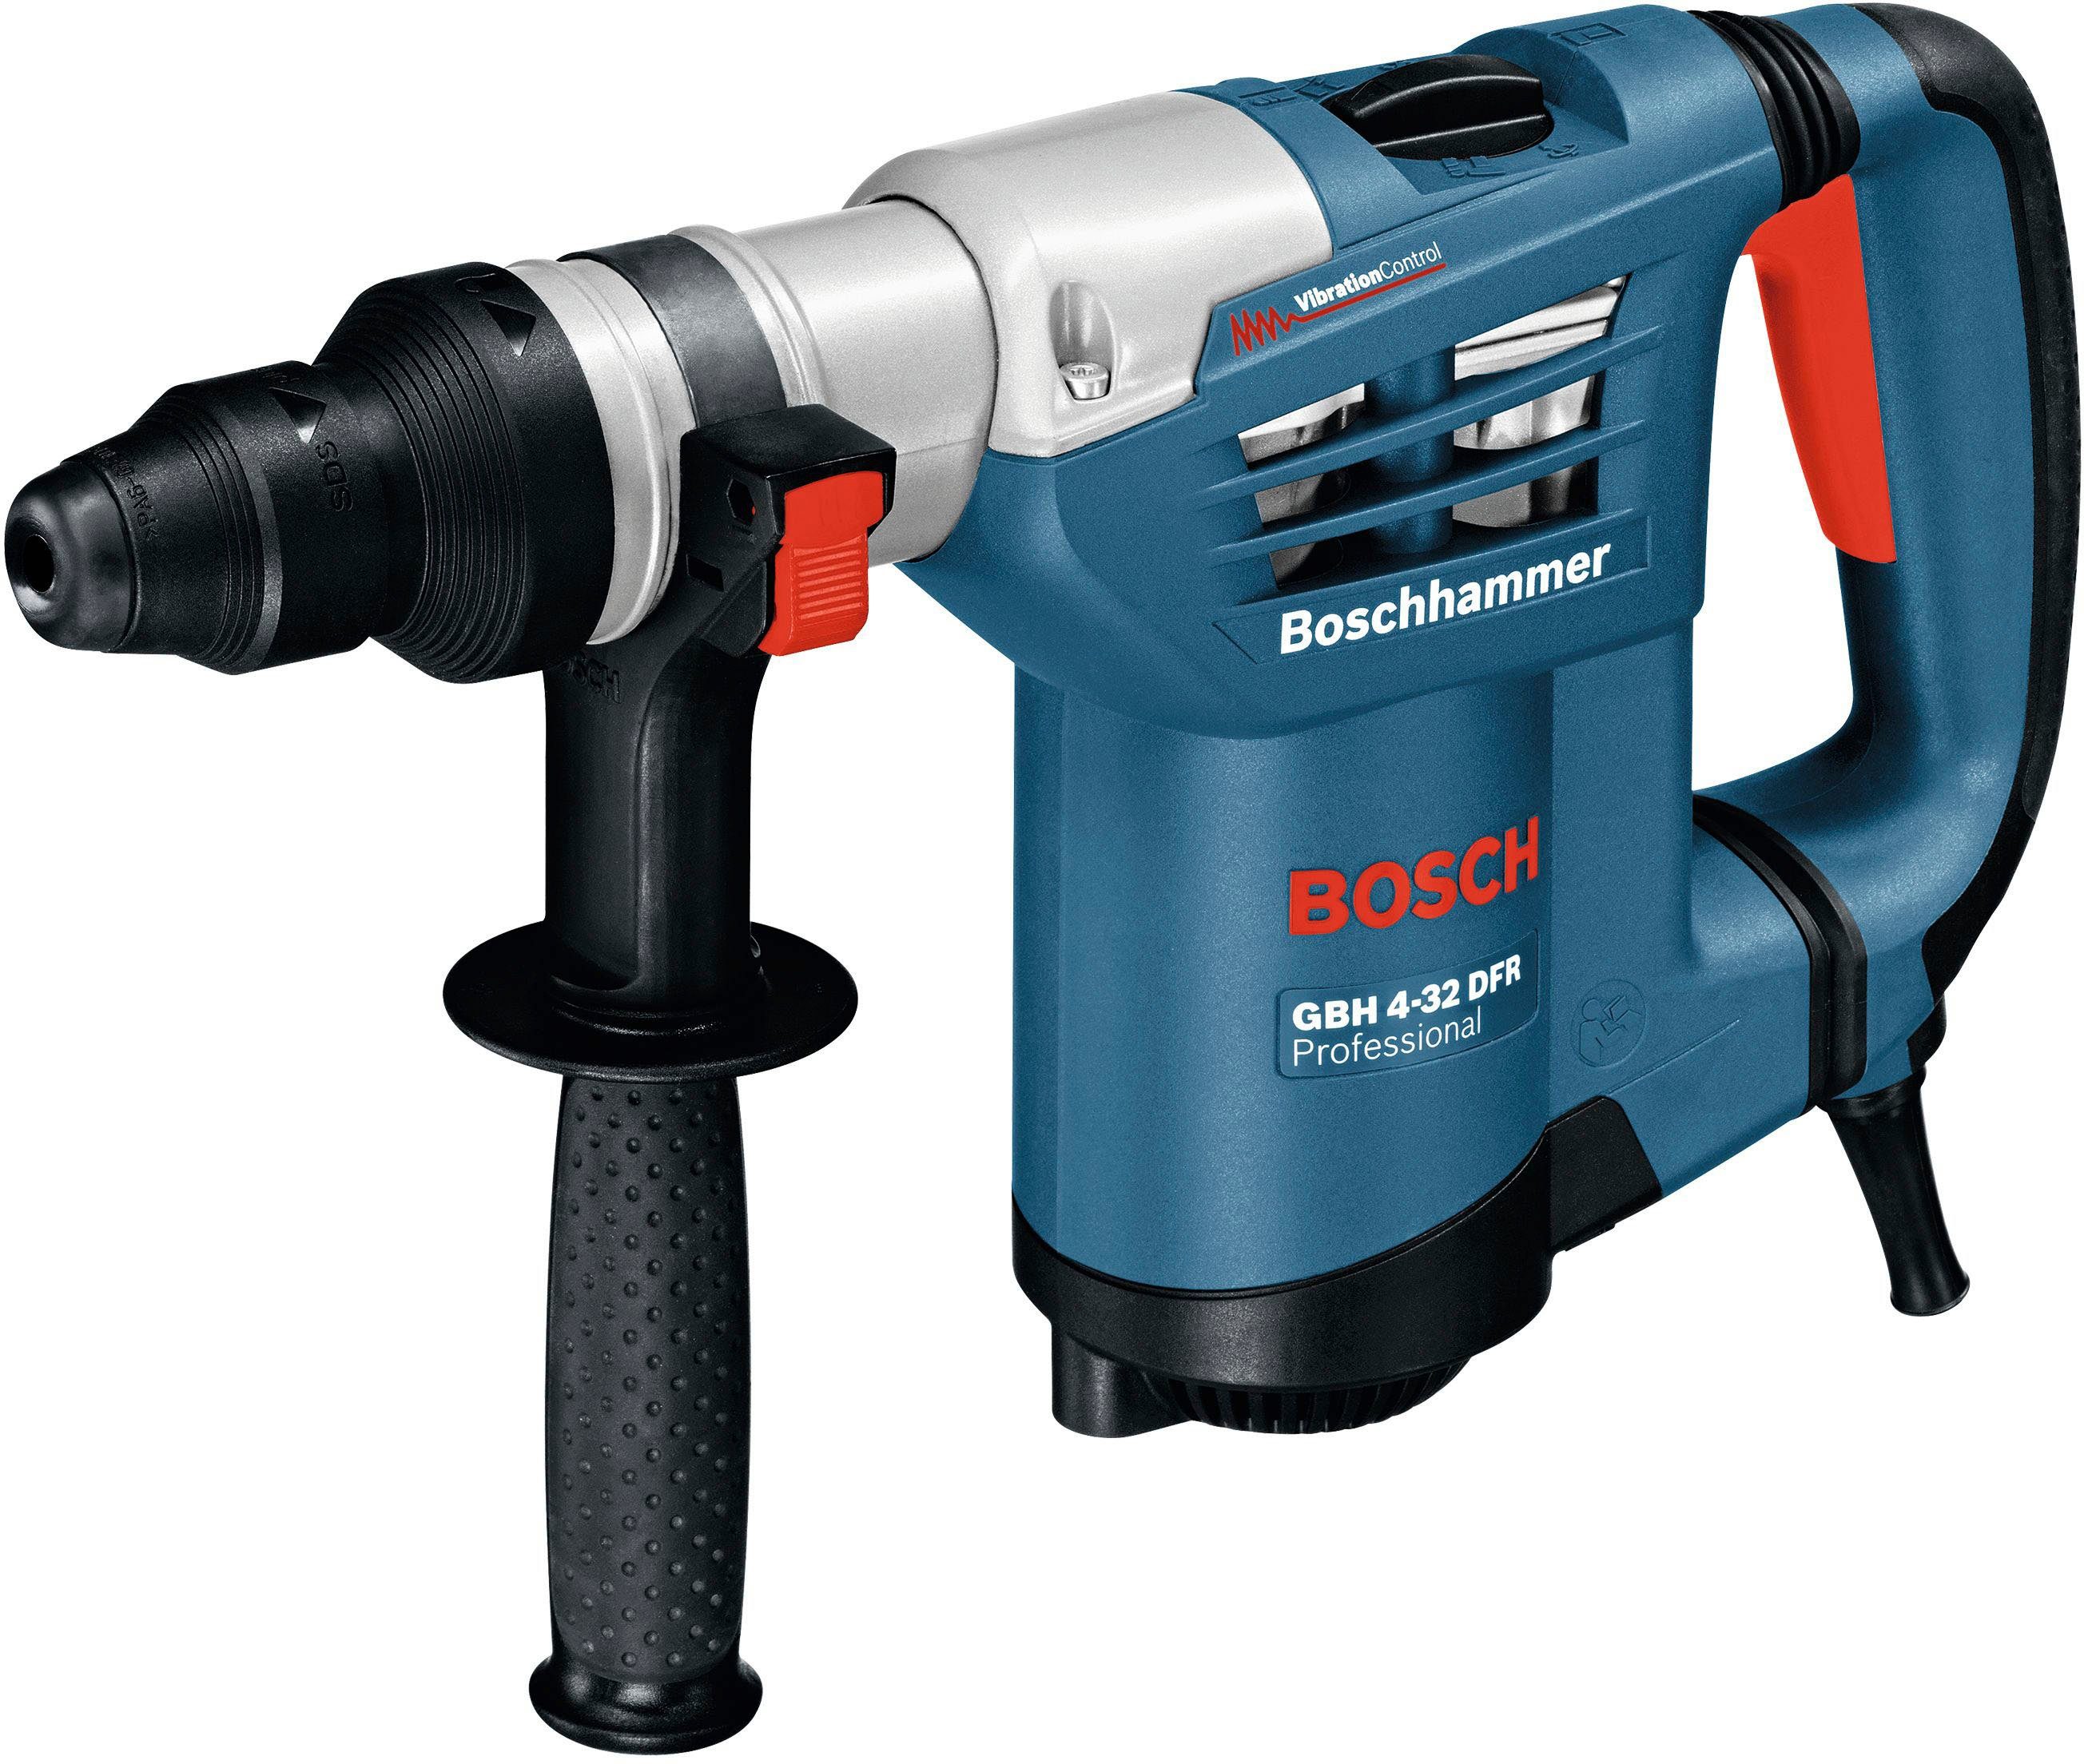 Bosch U/min, max. (Set) DFR, GBH Professional Bohrhammer 4-32 780